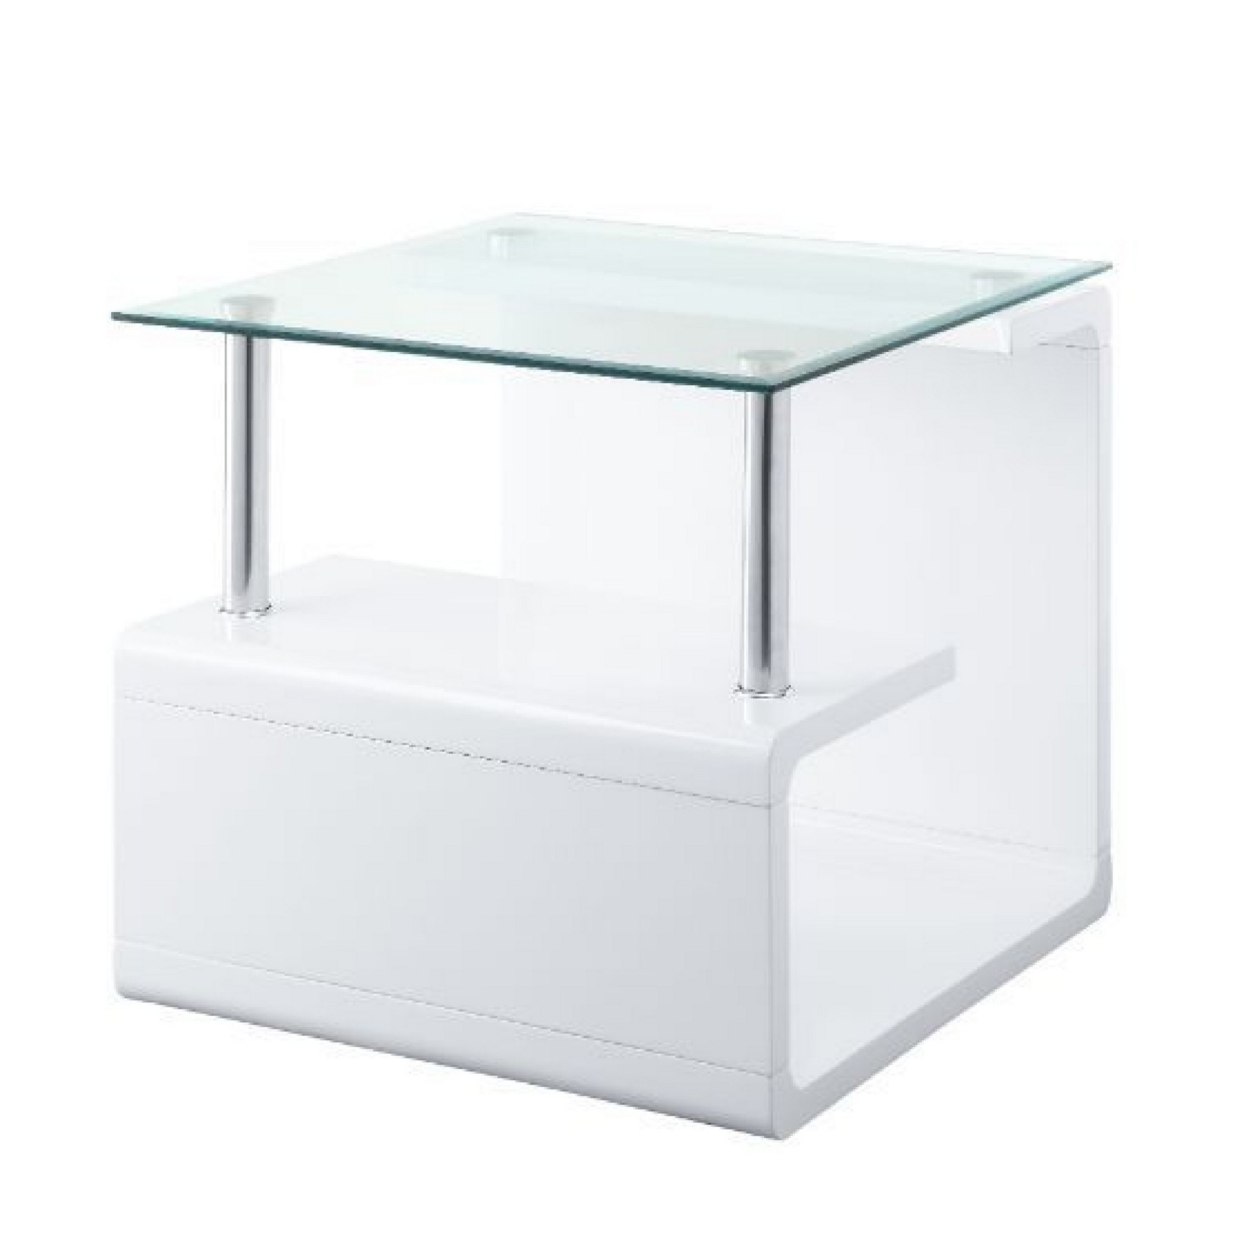 24 Inch Square Accent End Table, Glass Top, Open Shelf, White, Chrome- Saltoro Sherpi